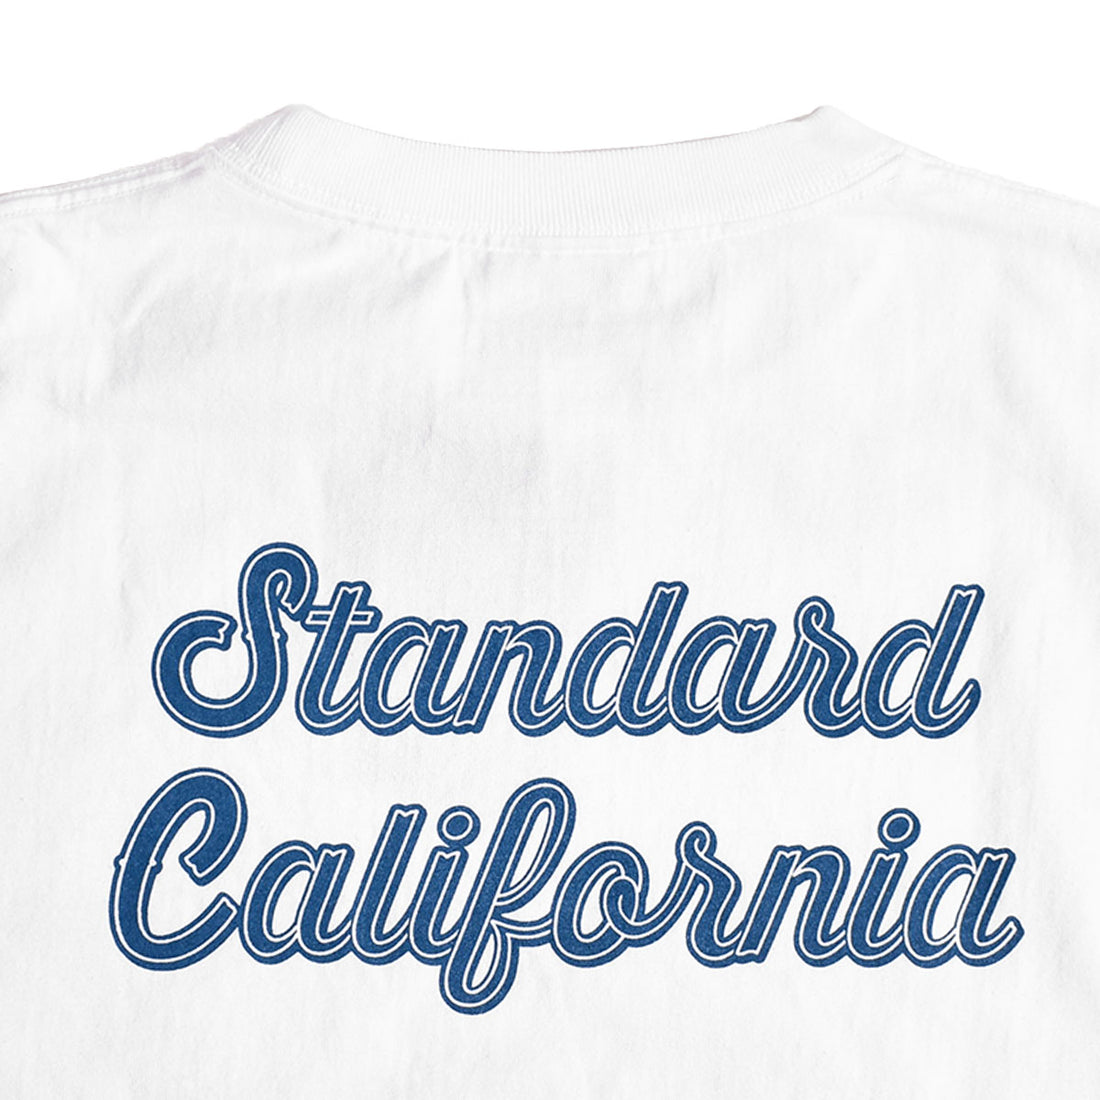 [STANDARD CALIFORNIA]SD Heavyweight Script Logo T/WHITE(TSOSR090)